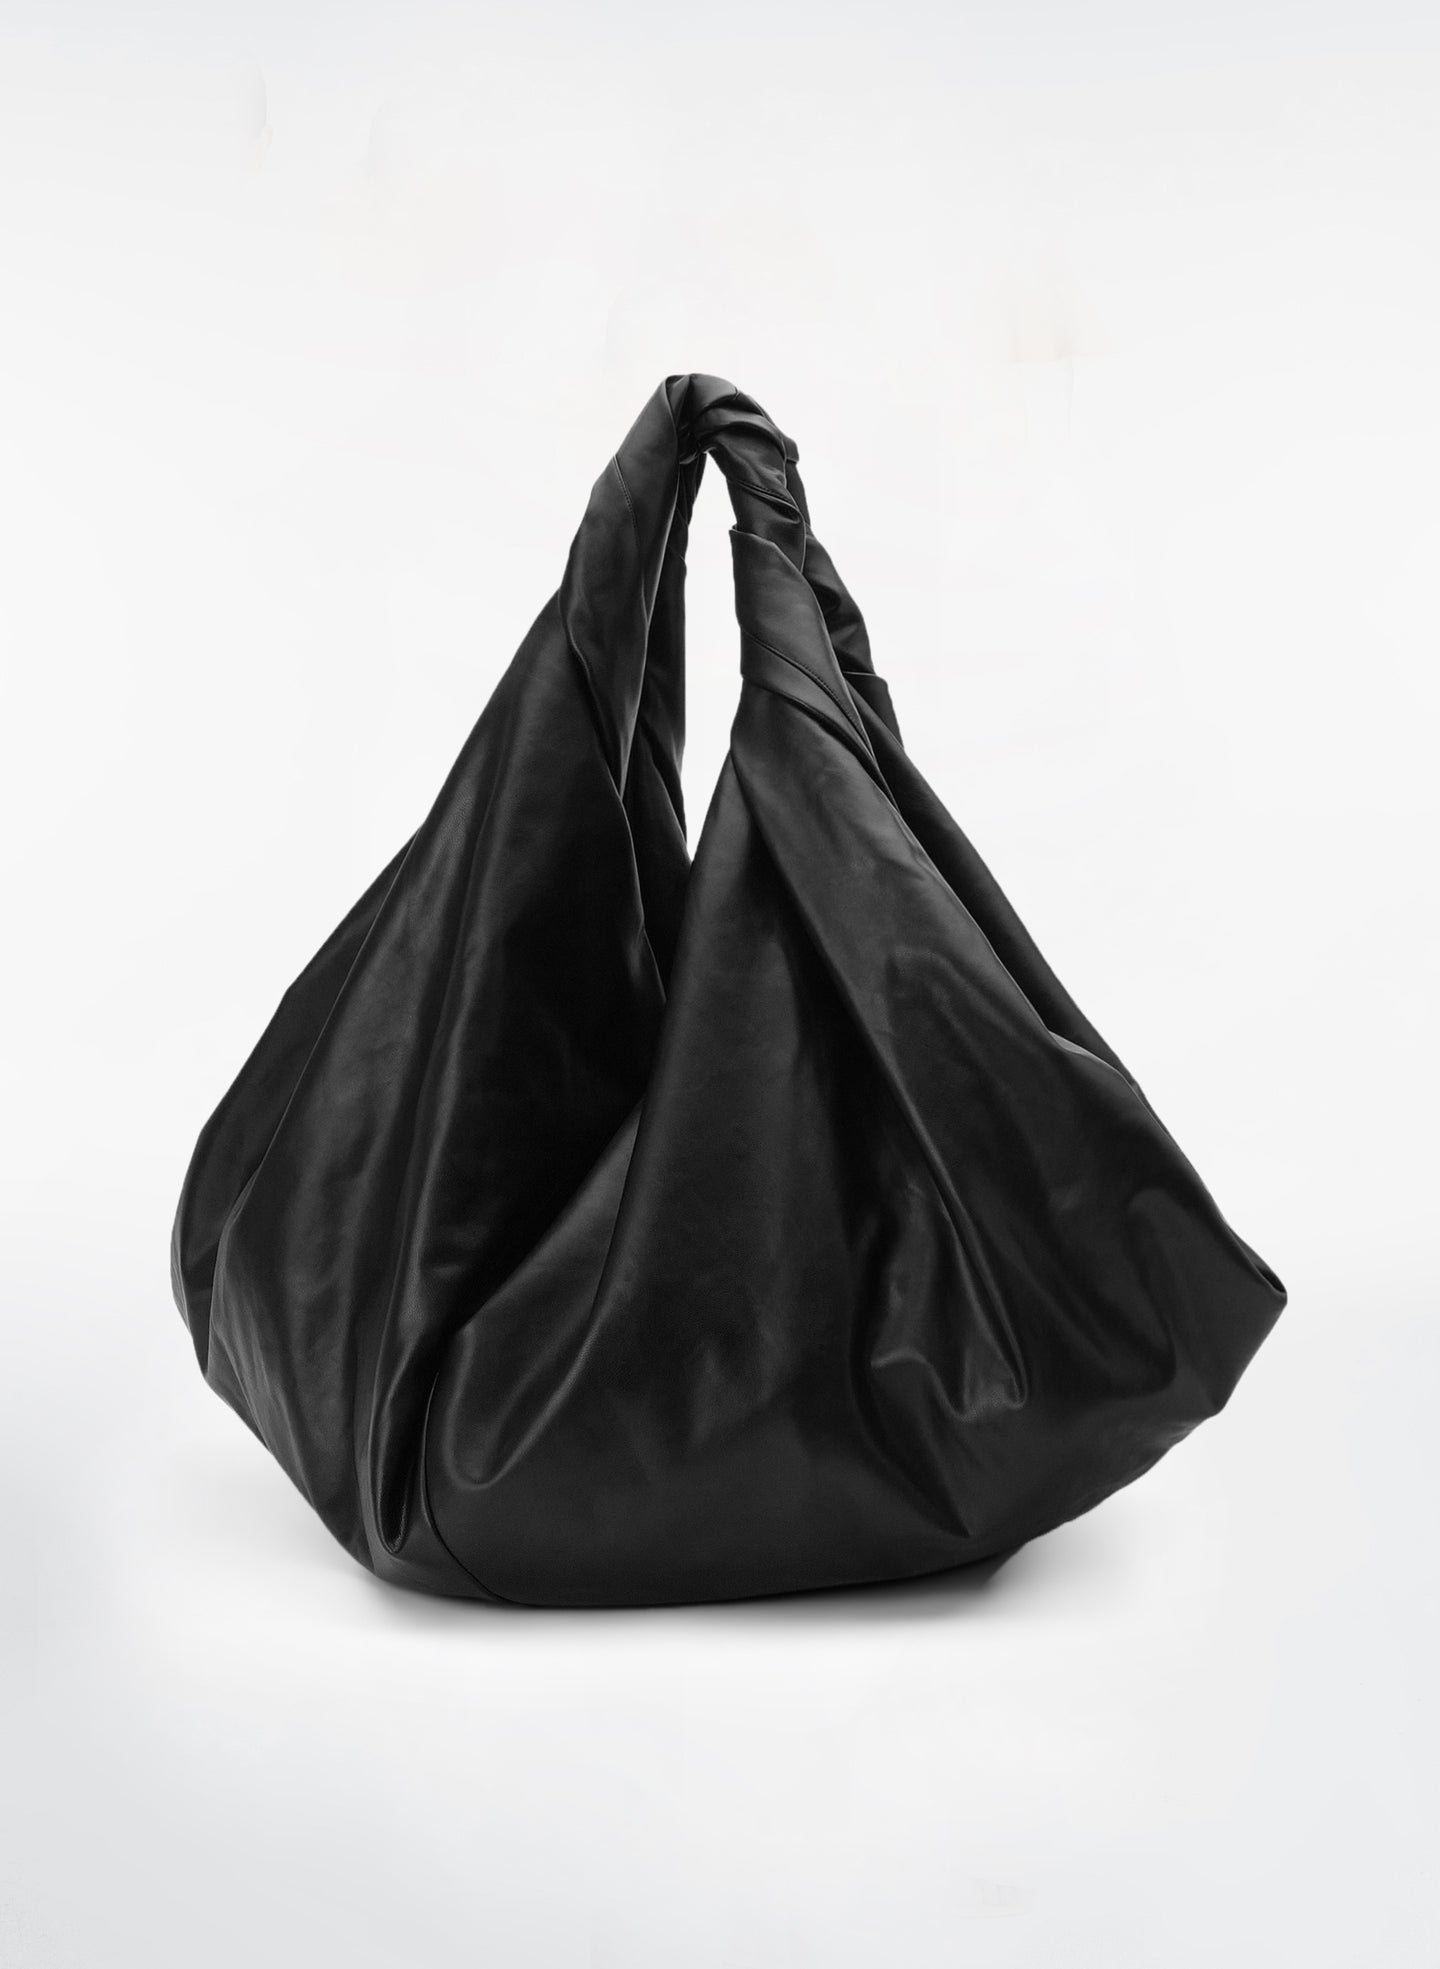 flat lay view of black vegan leather medium length top handle bag with medium sized rectangular base